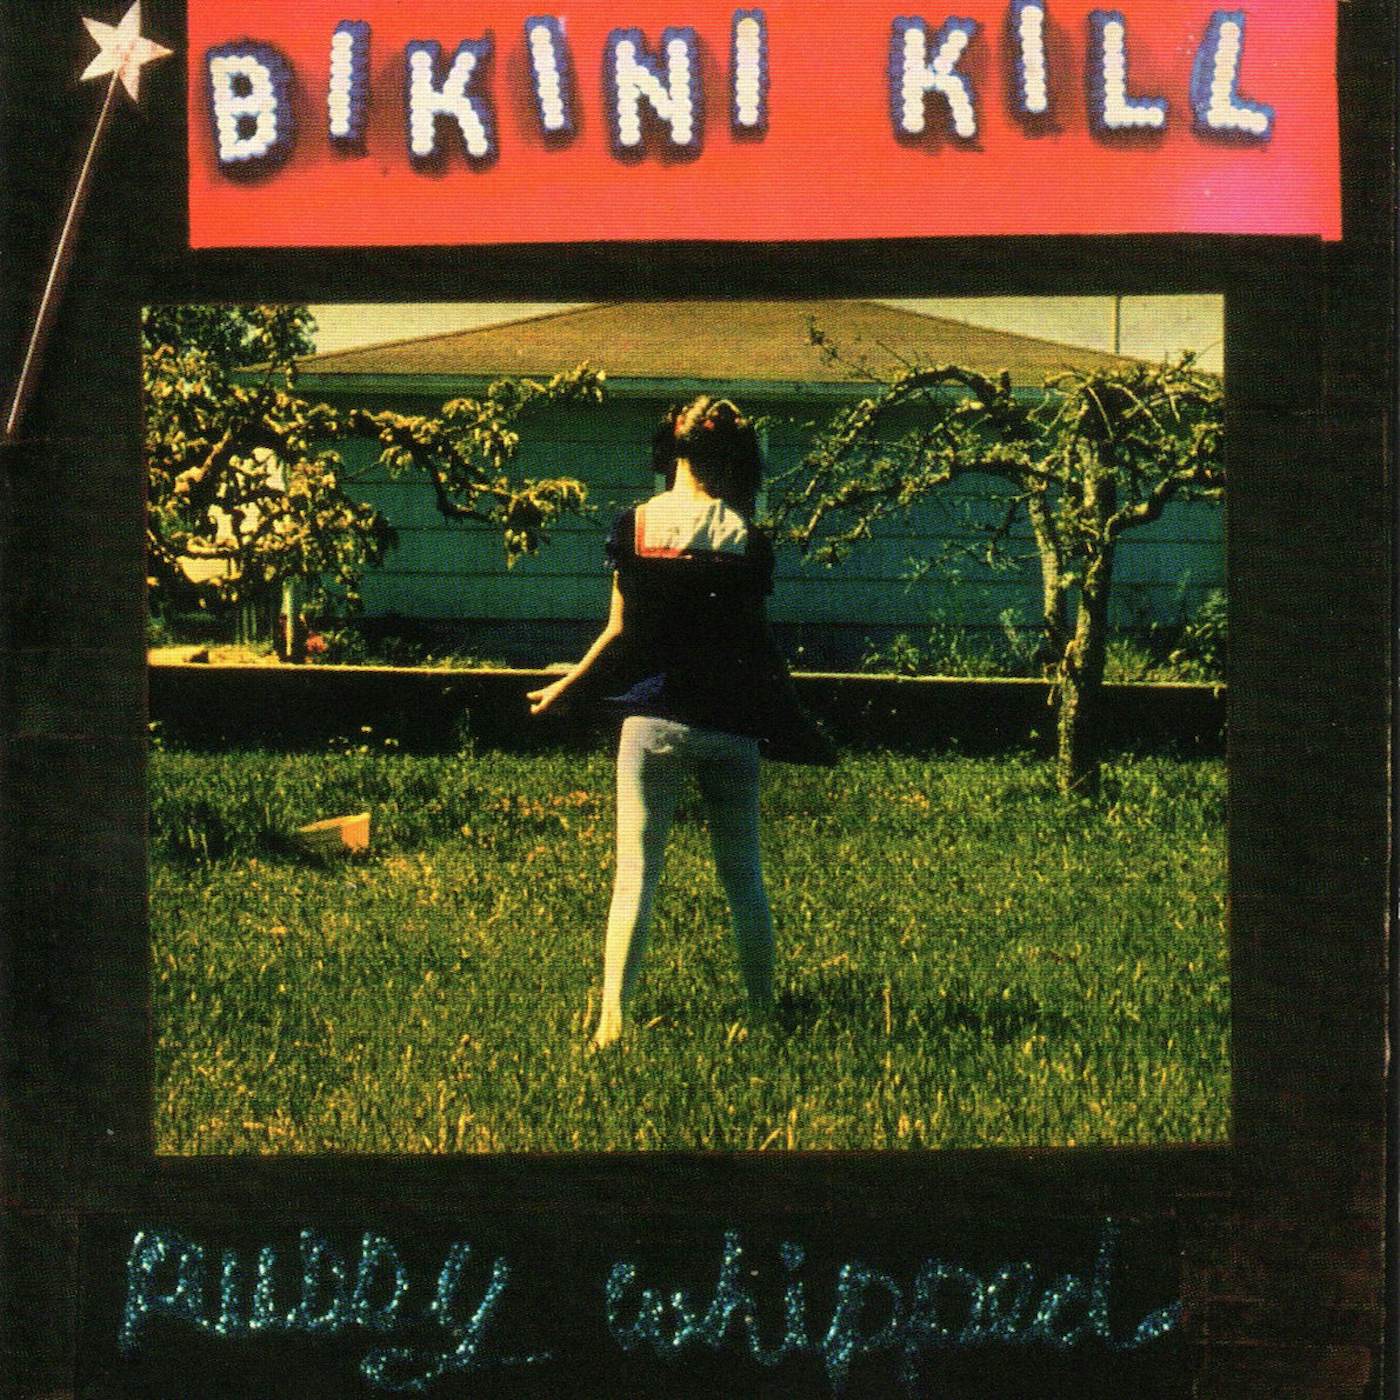 Bikini Kill PUSSY WHIPPED CD